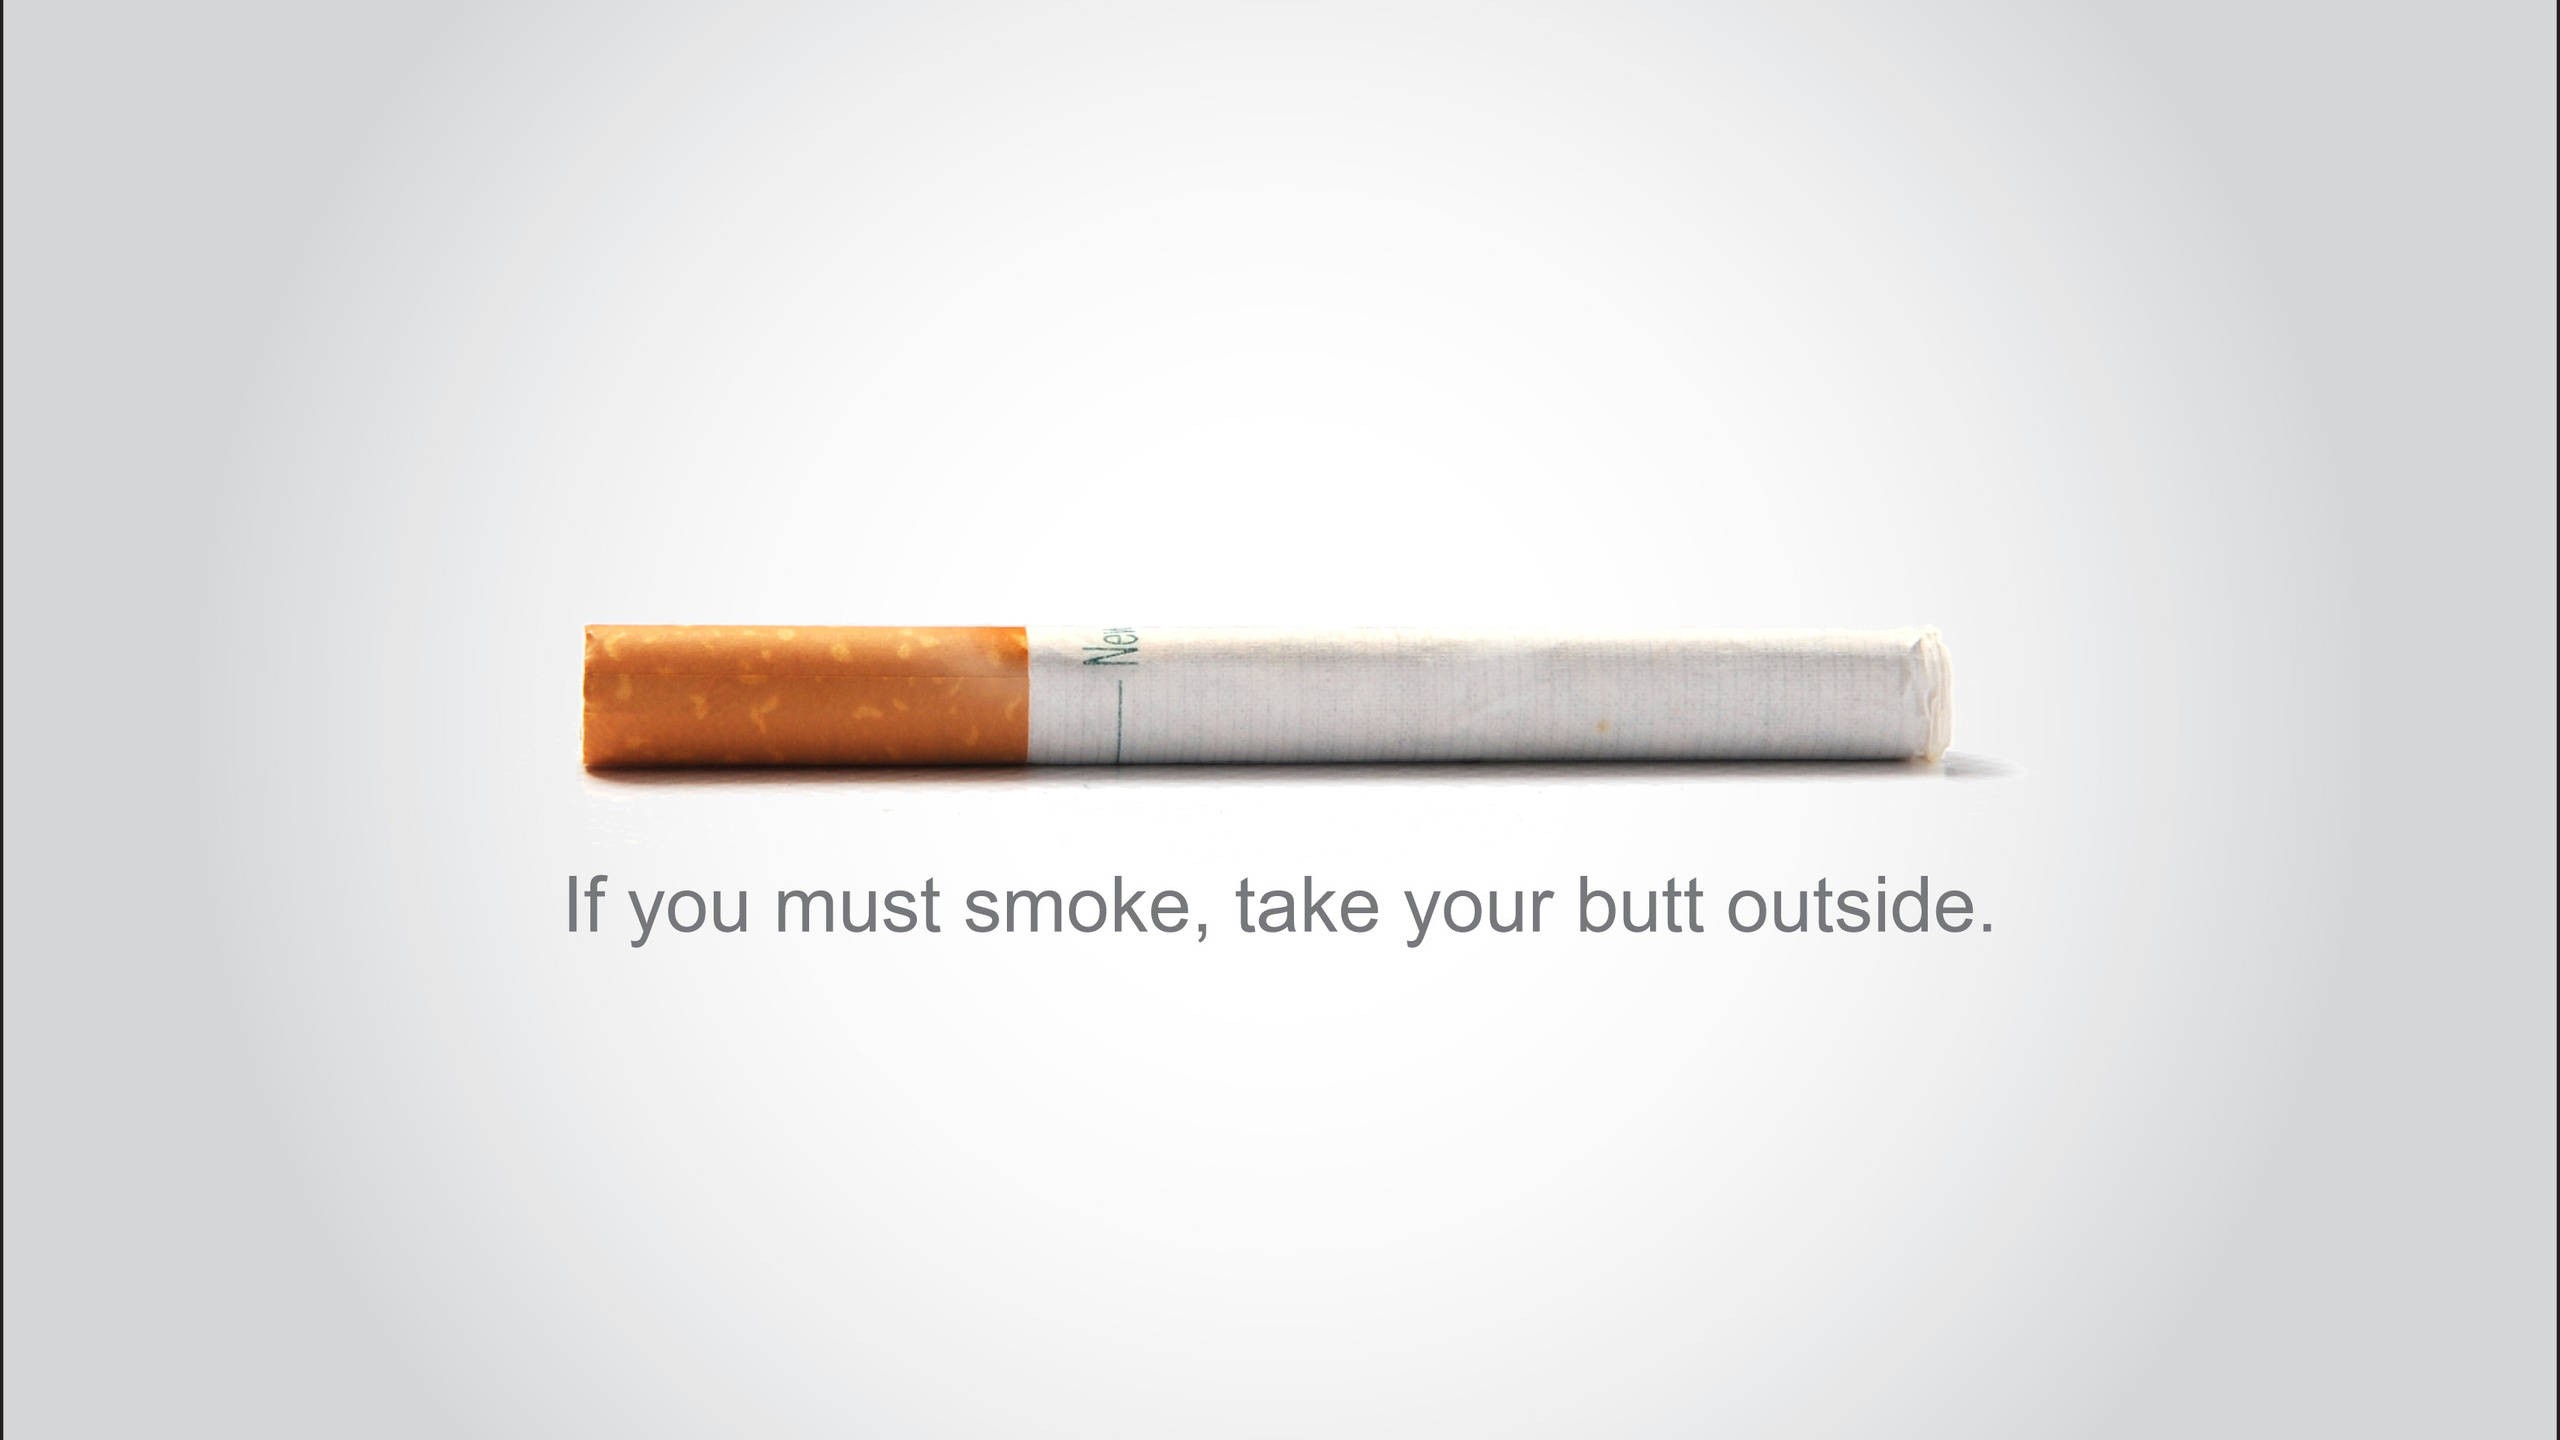 General 2560x1440 cigarettes Public Service Announcement smoking ass humor